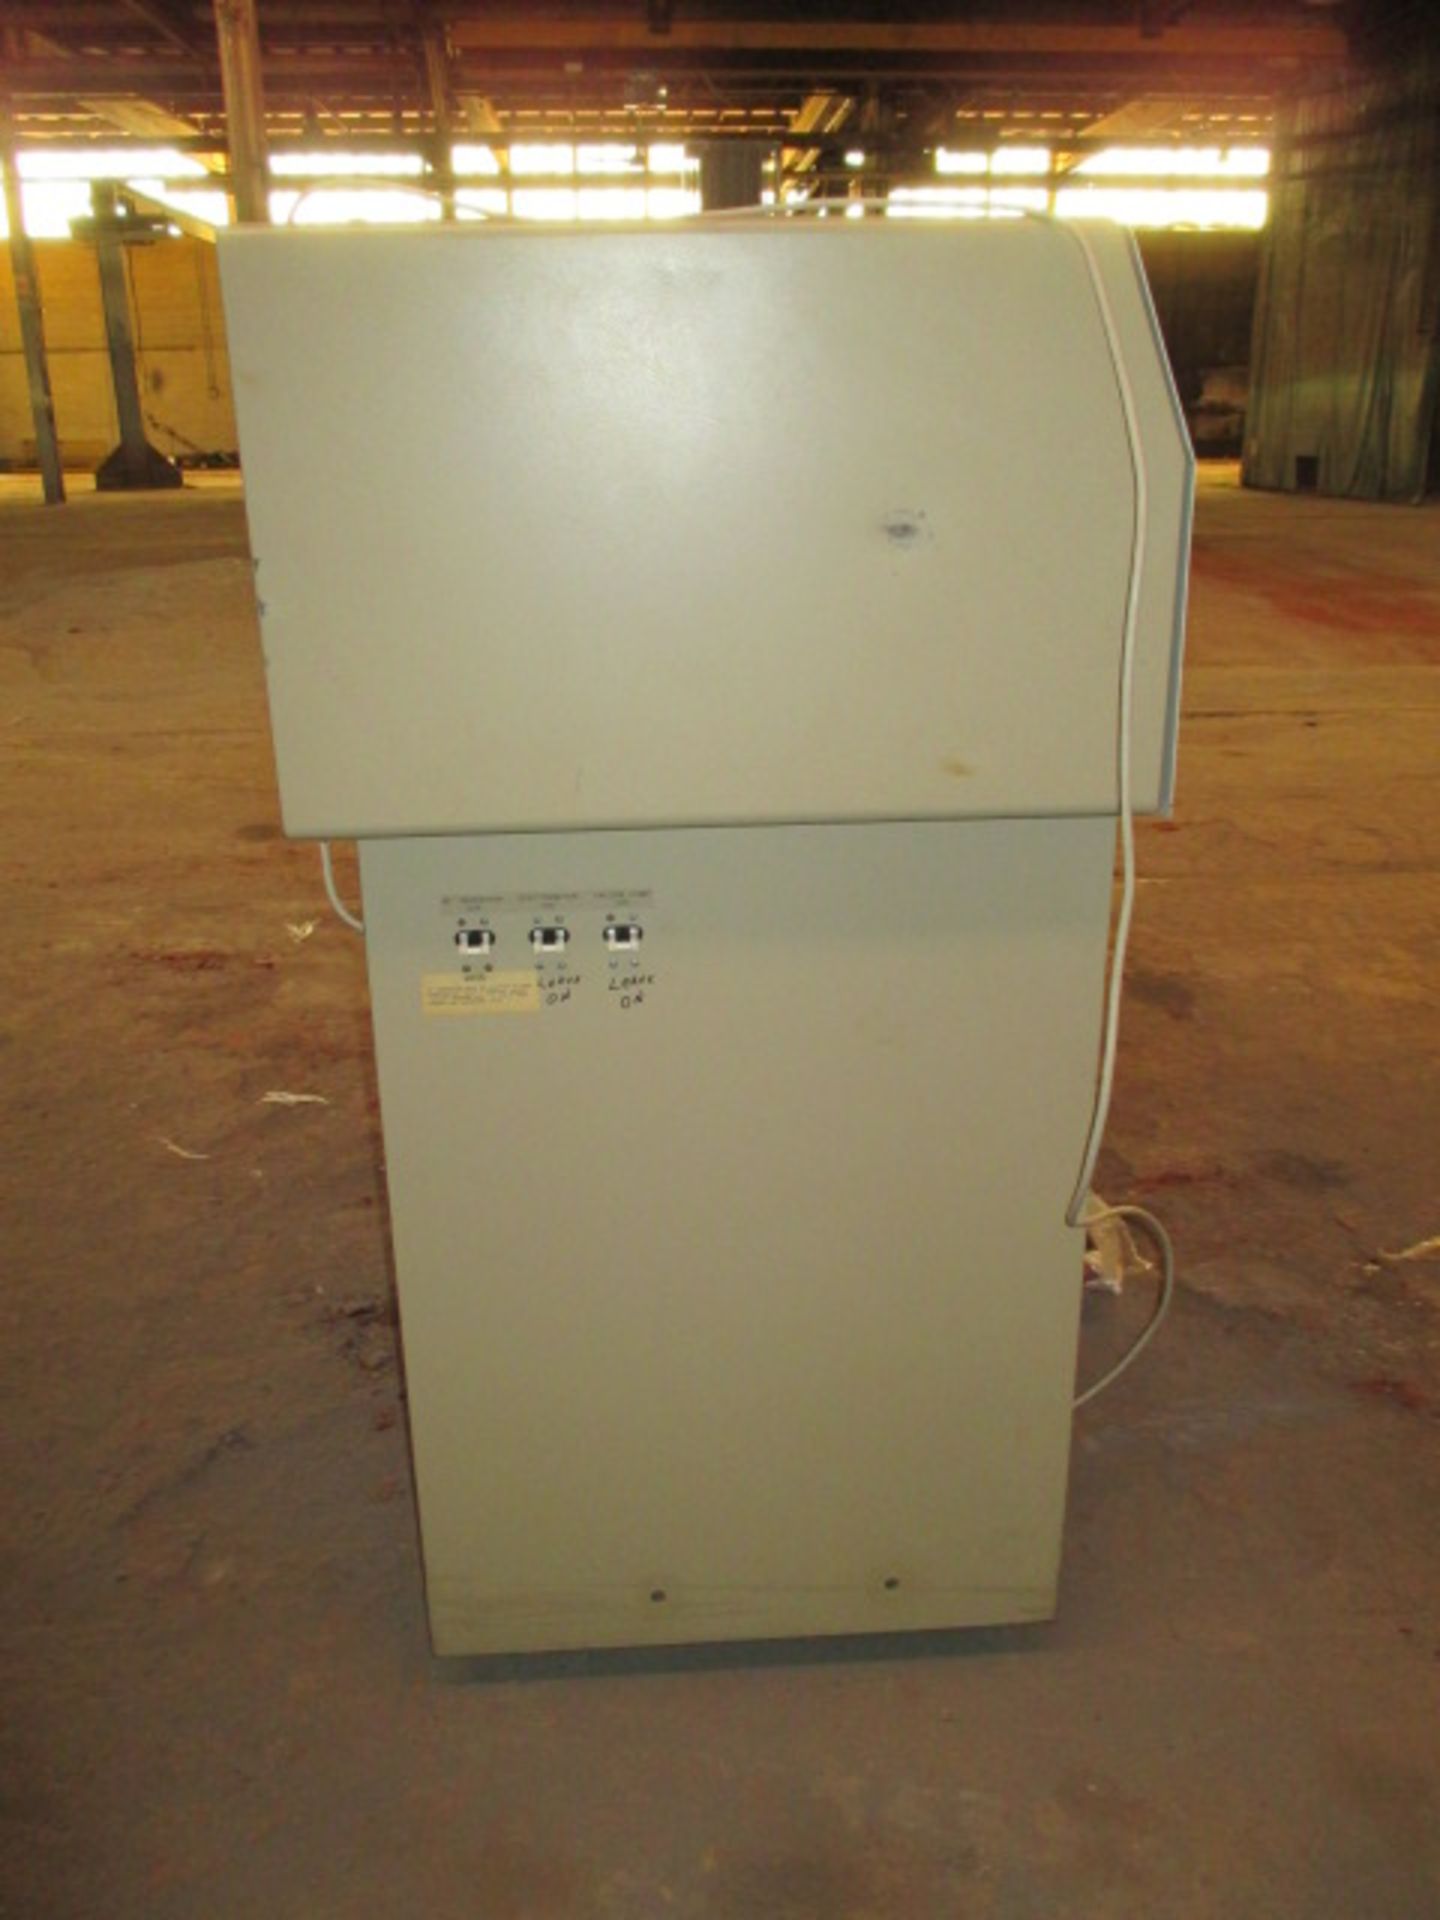 Fisons Instruments spectrometer, model 3410 + ICP, with Nebulizer, model Tk-30-K3, 220 volt - Image 5 of 10